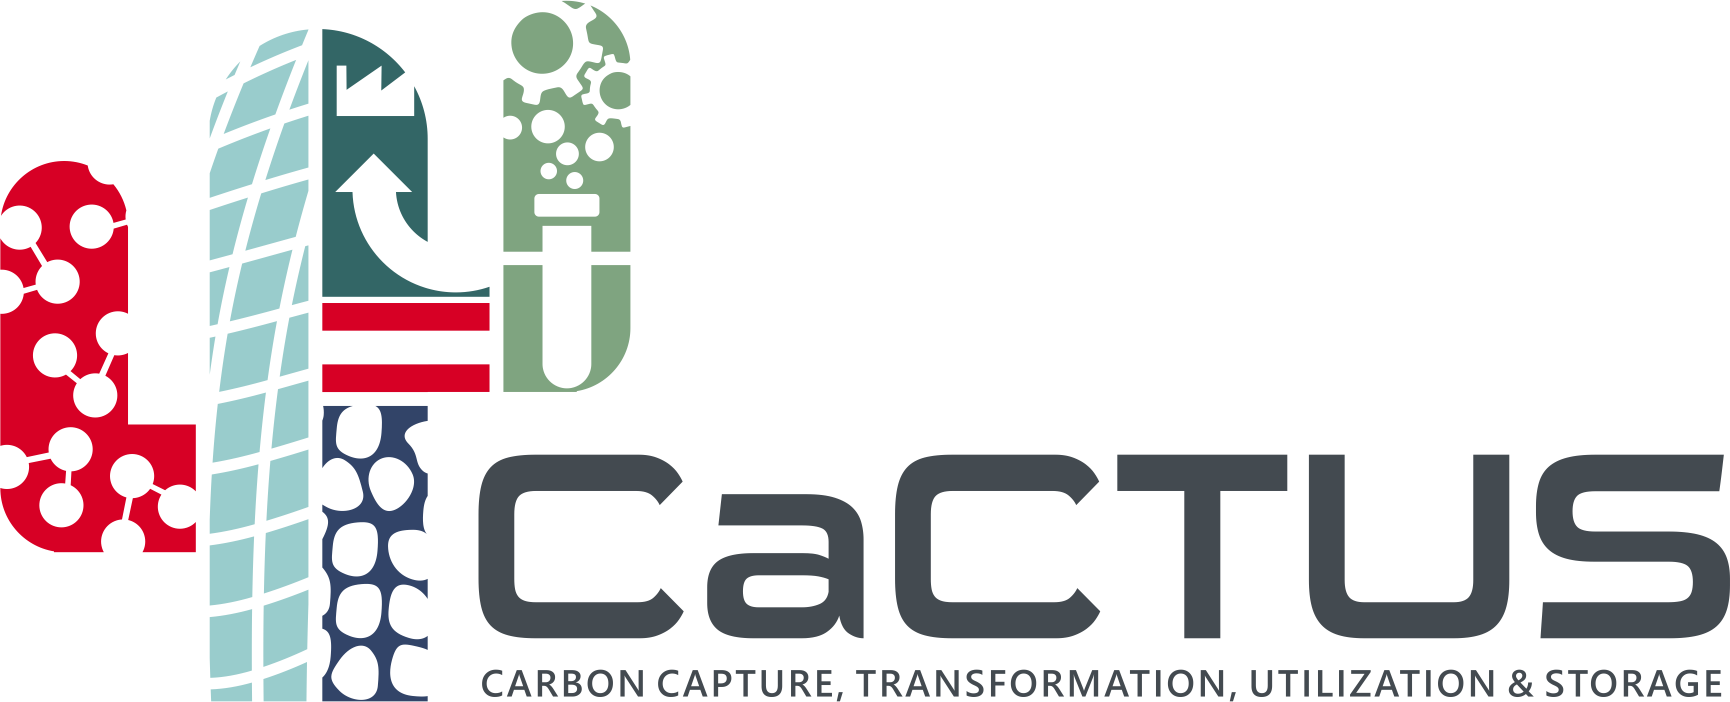 Projekt Cactus Logo